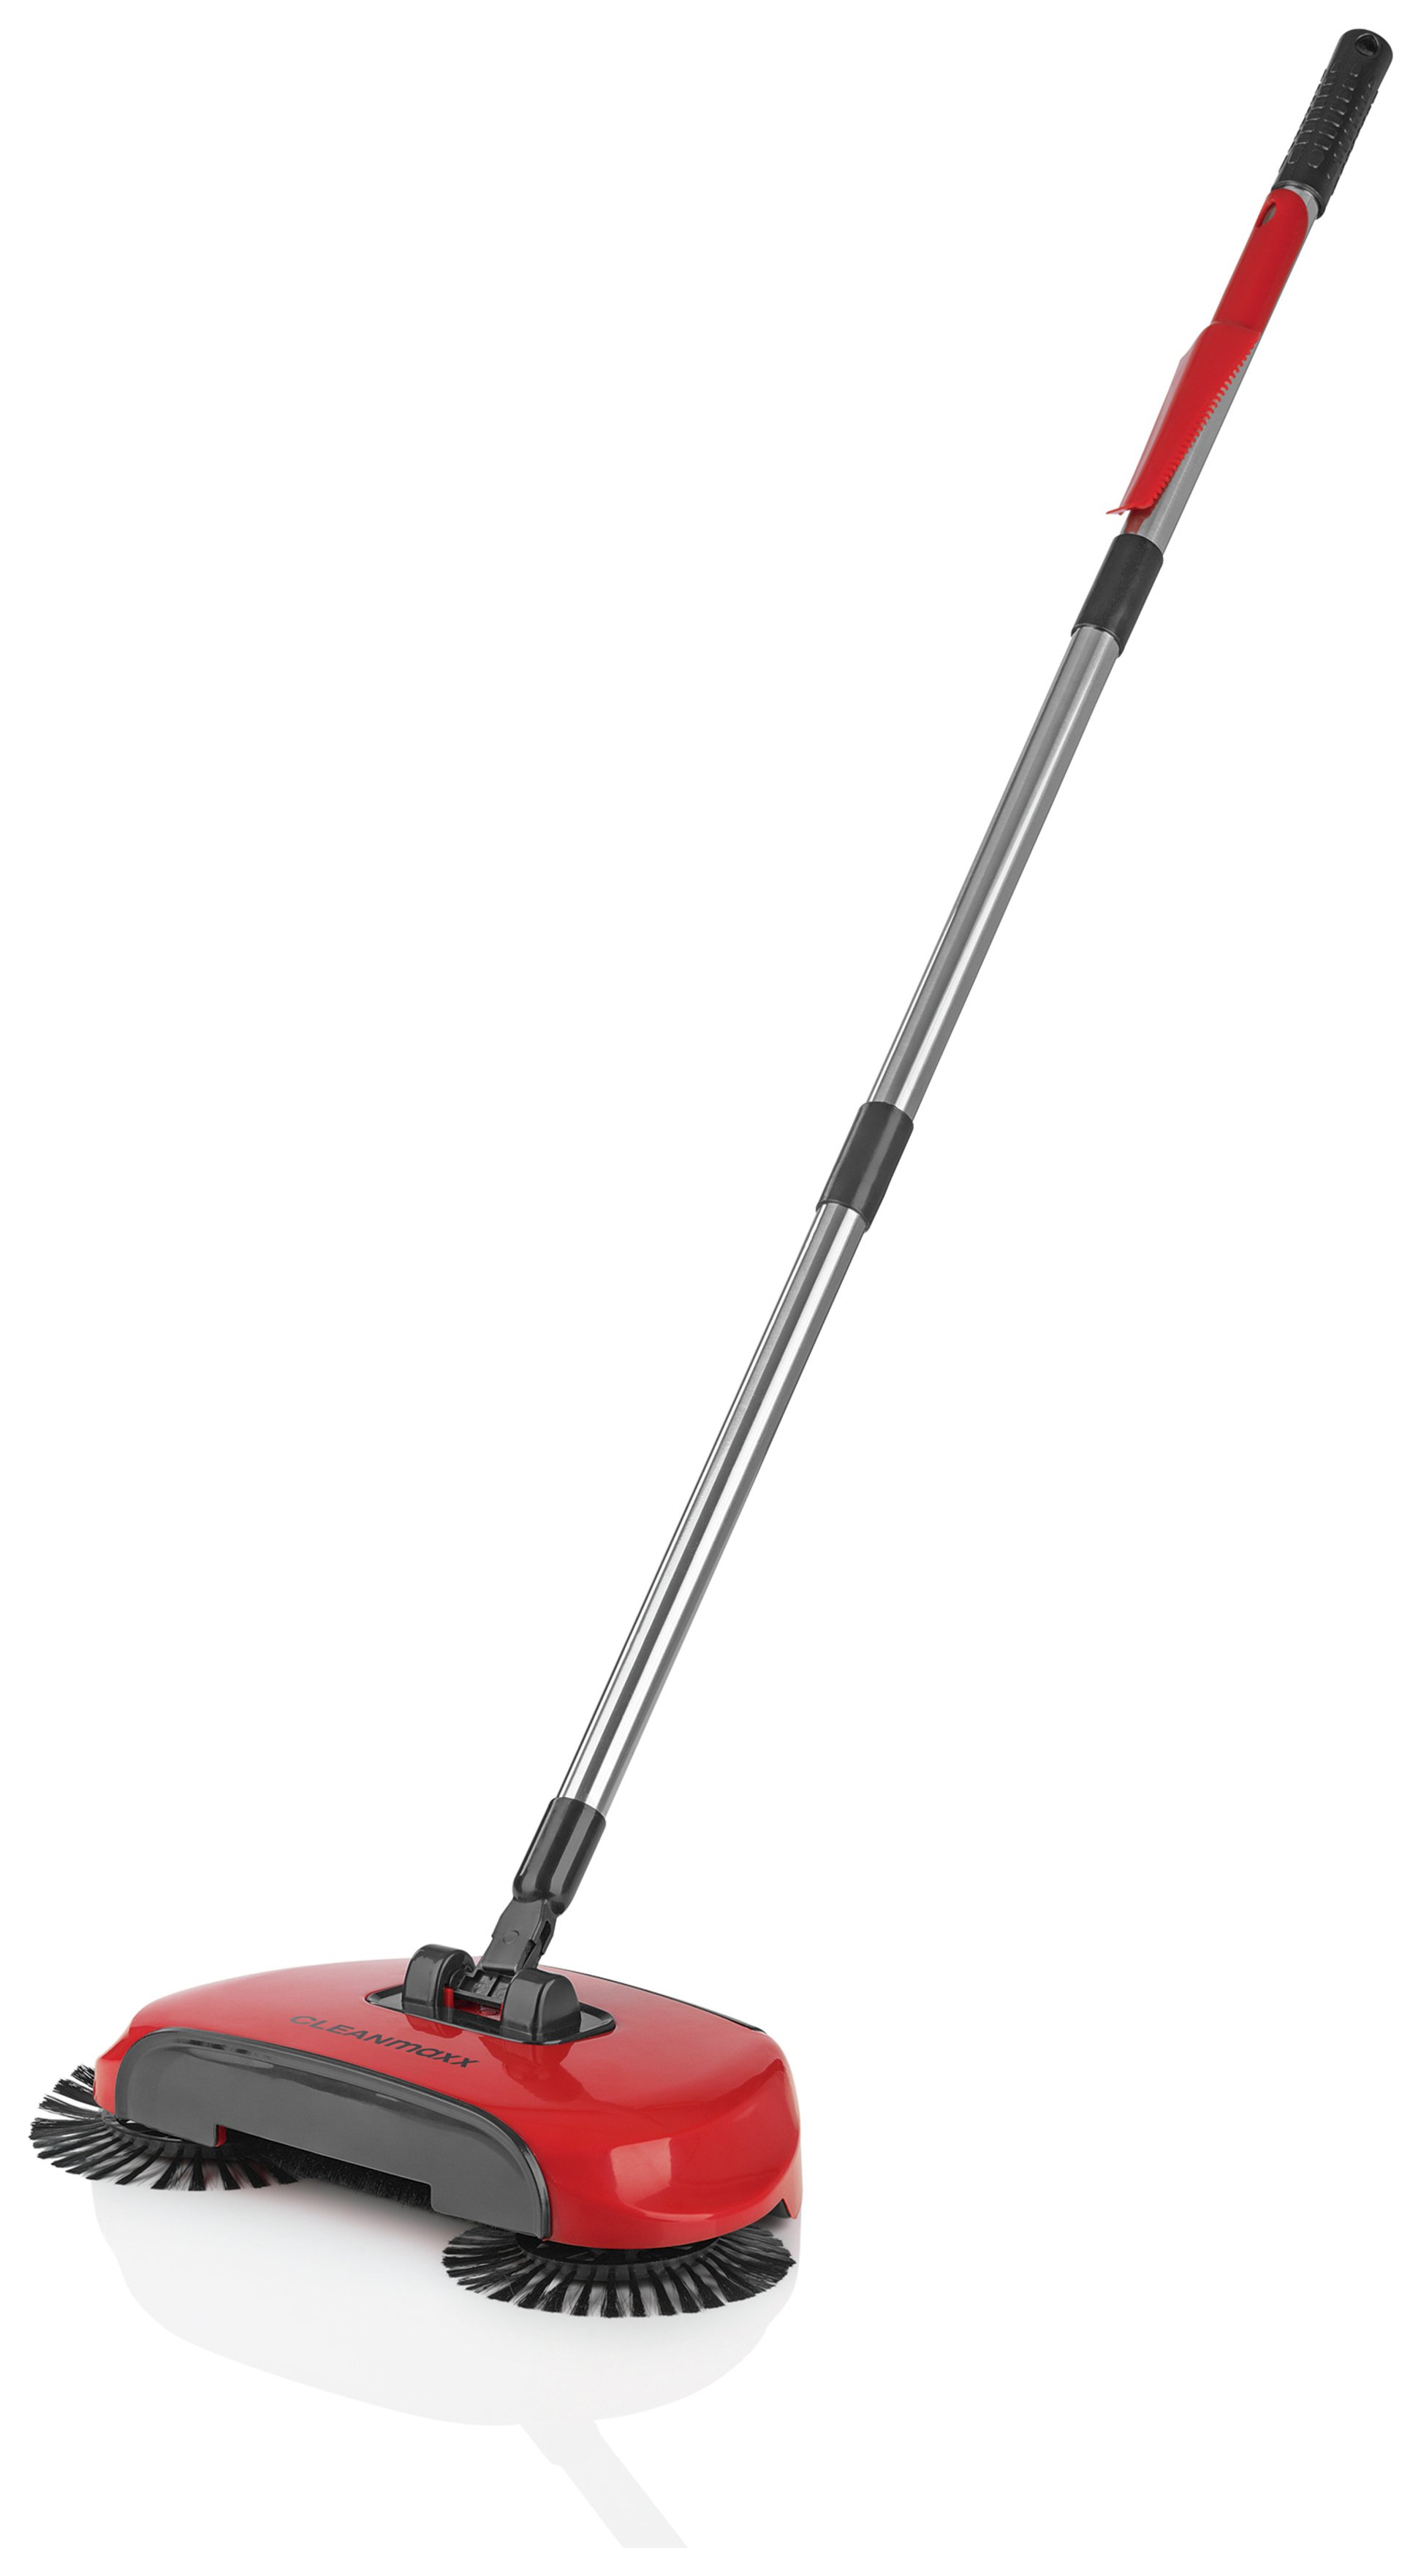 CLEANmaxx 3 Brush Manual Floor Sweeper & Dust Bin review